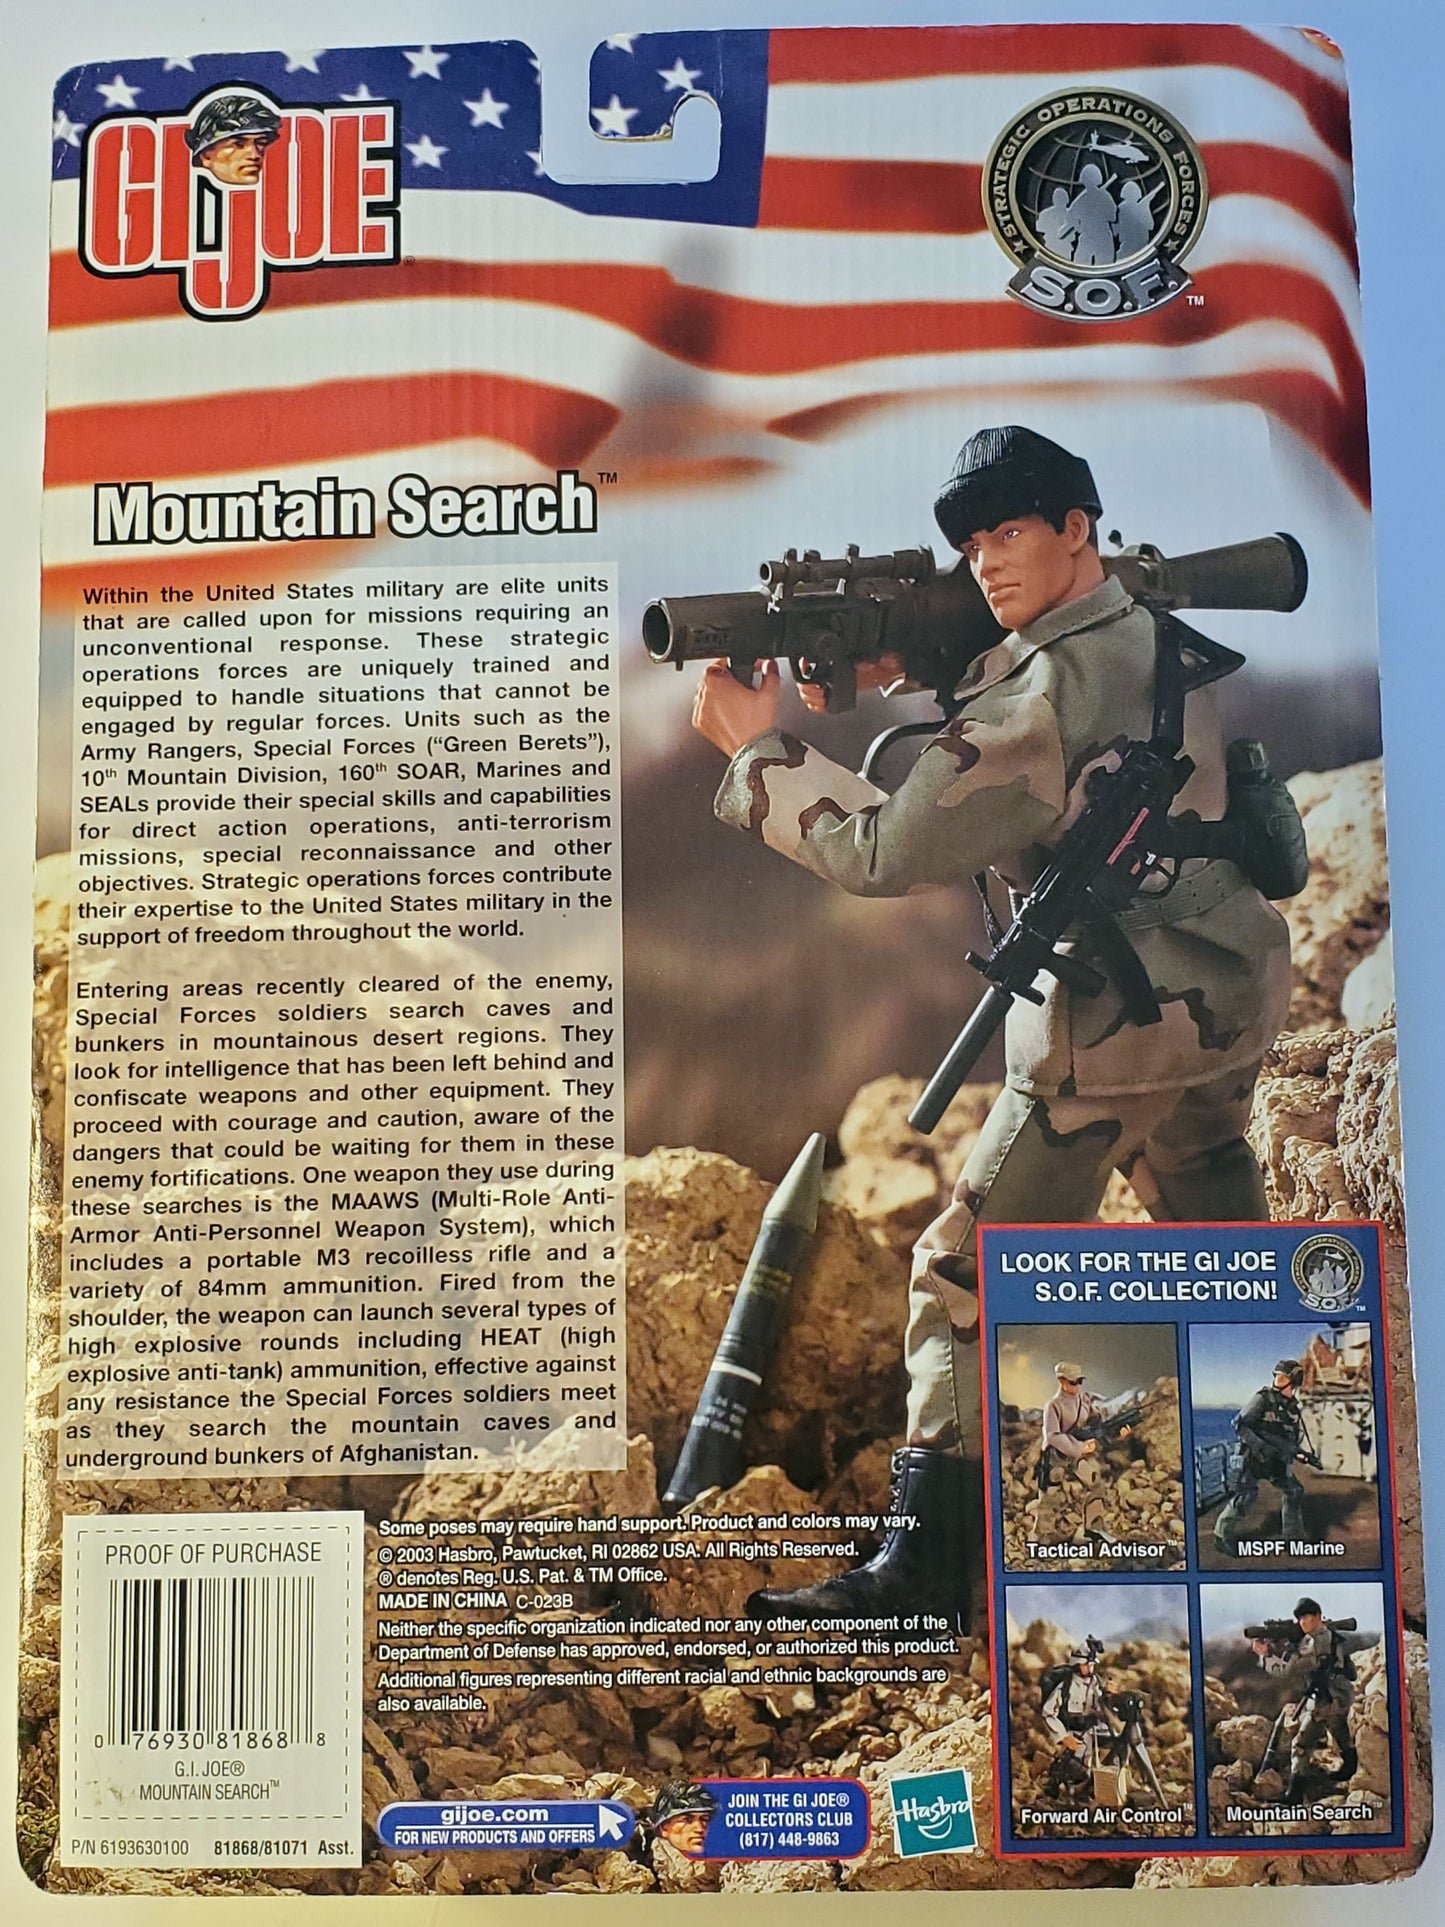 G.I. Joe Mountain Search 12-Inch Action Figure